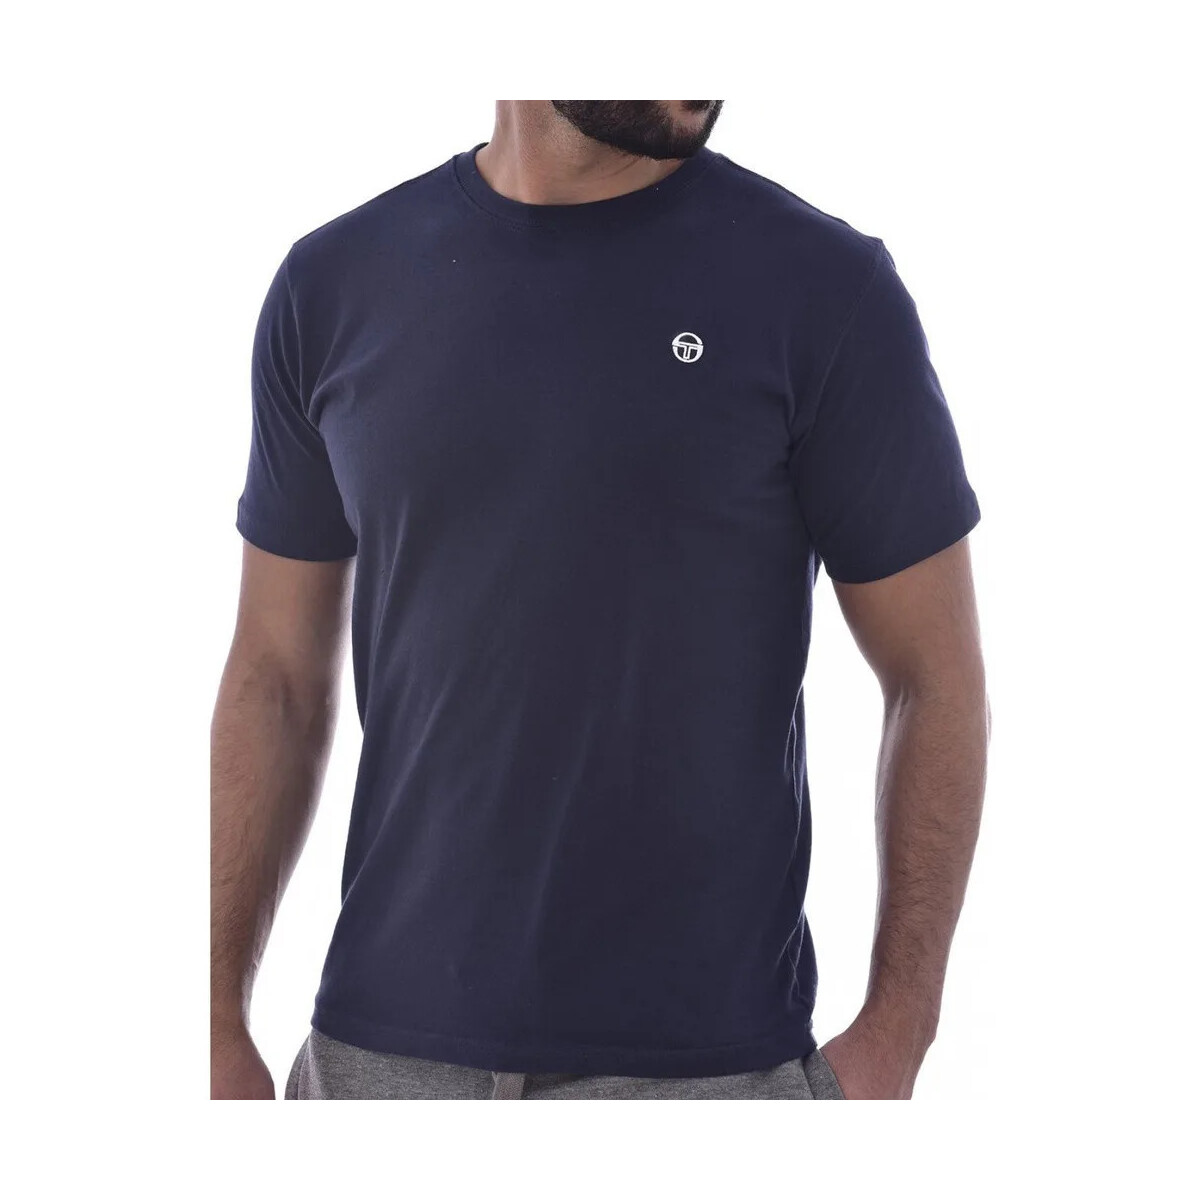 Vêtements Homme TOM FORD mélange-effect long-sleeve T-shirt ST-103.10007 Bleu